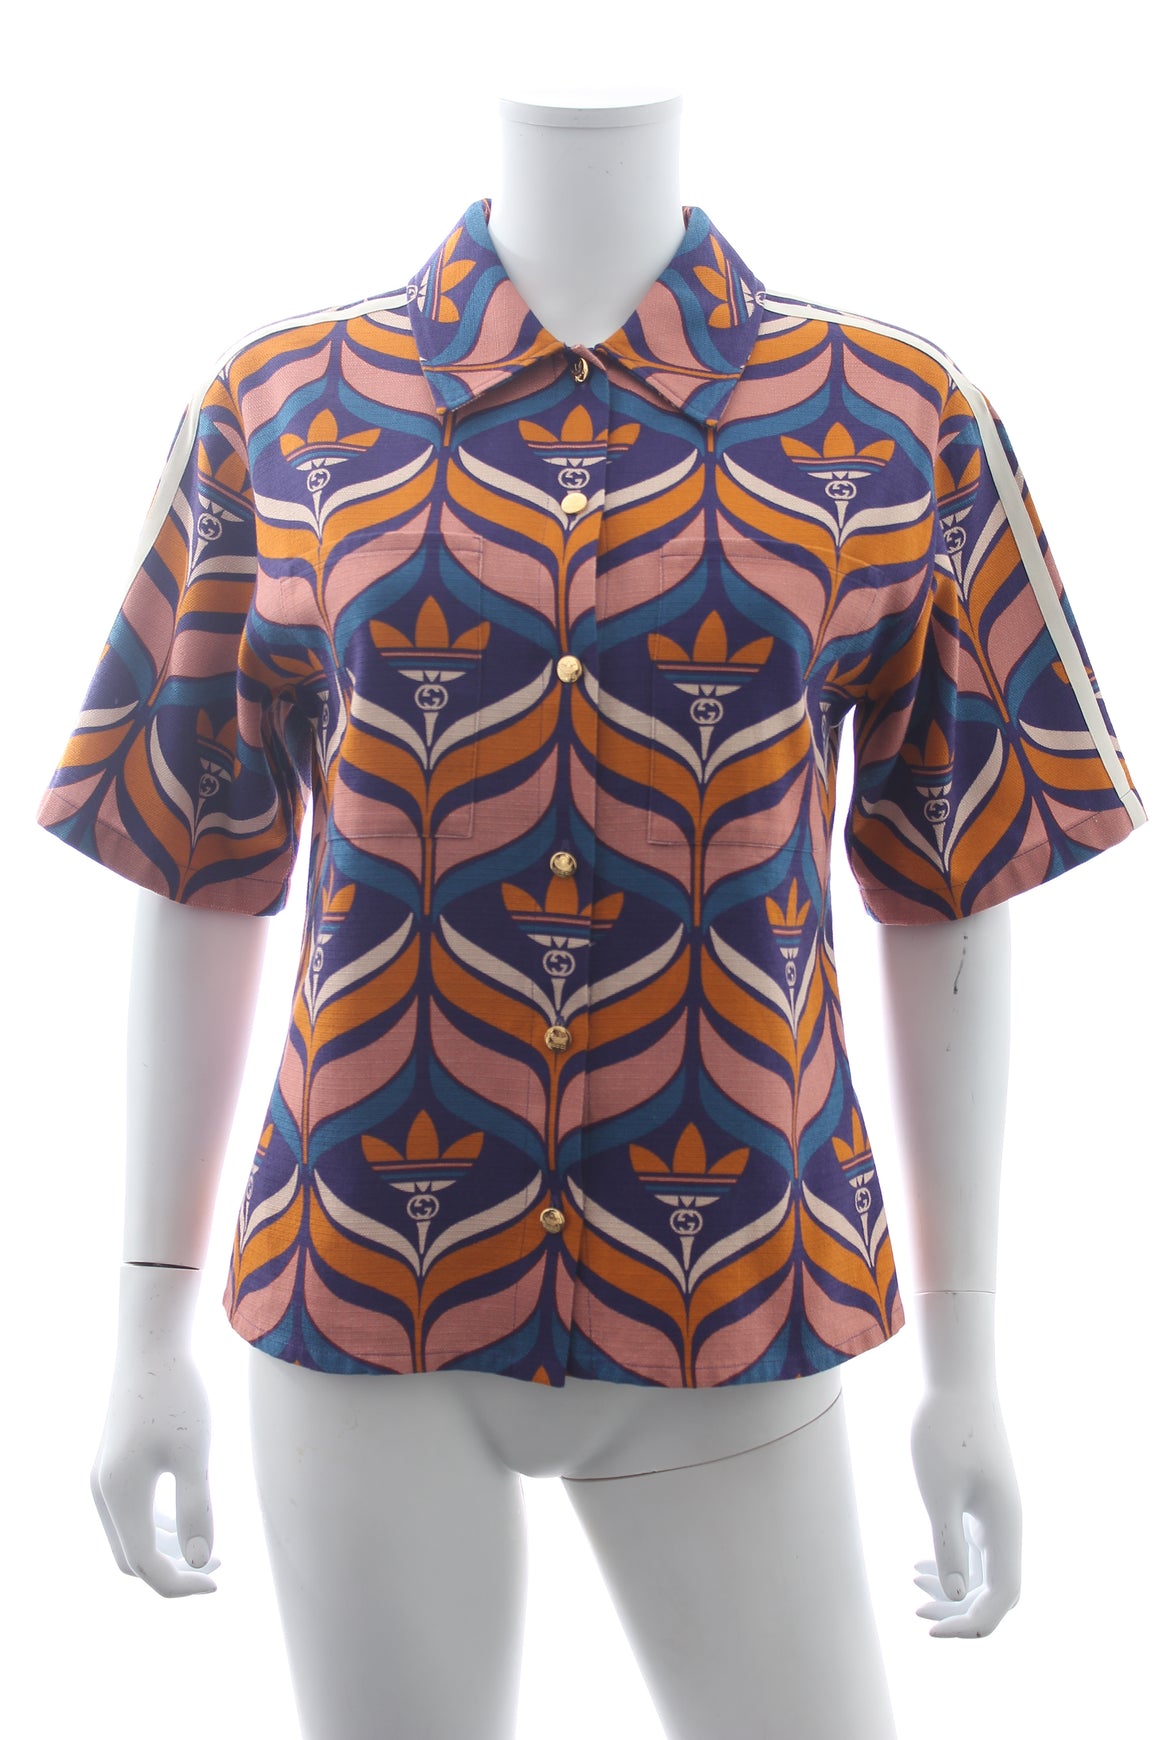 Gucci x Adidas Trefoil Printed Cotton Bowling Shirt